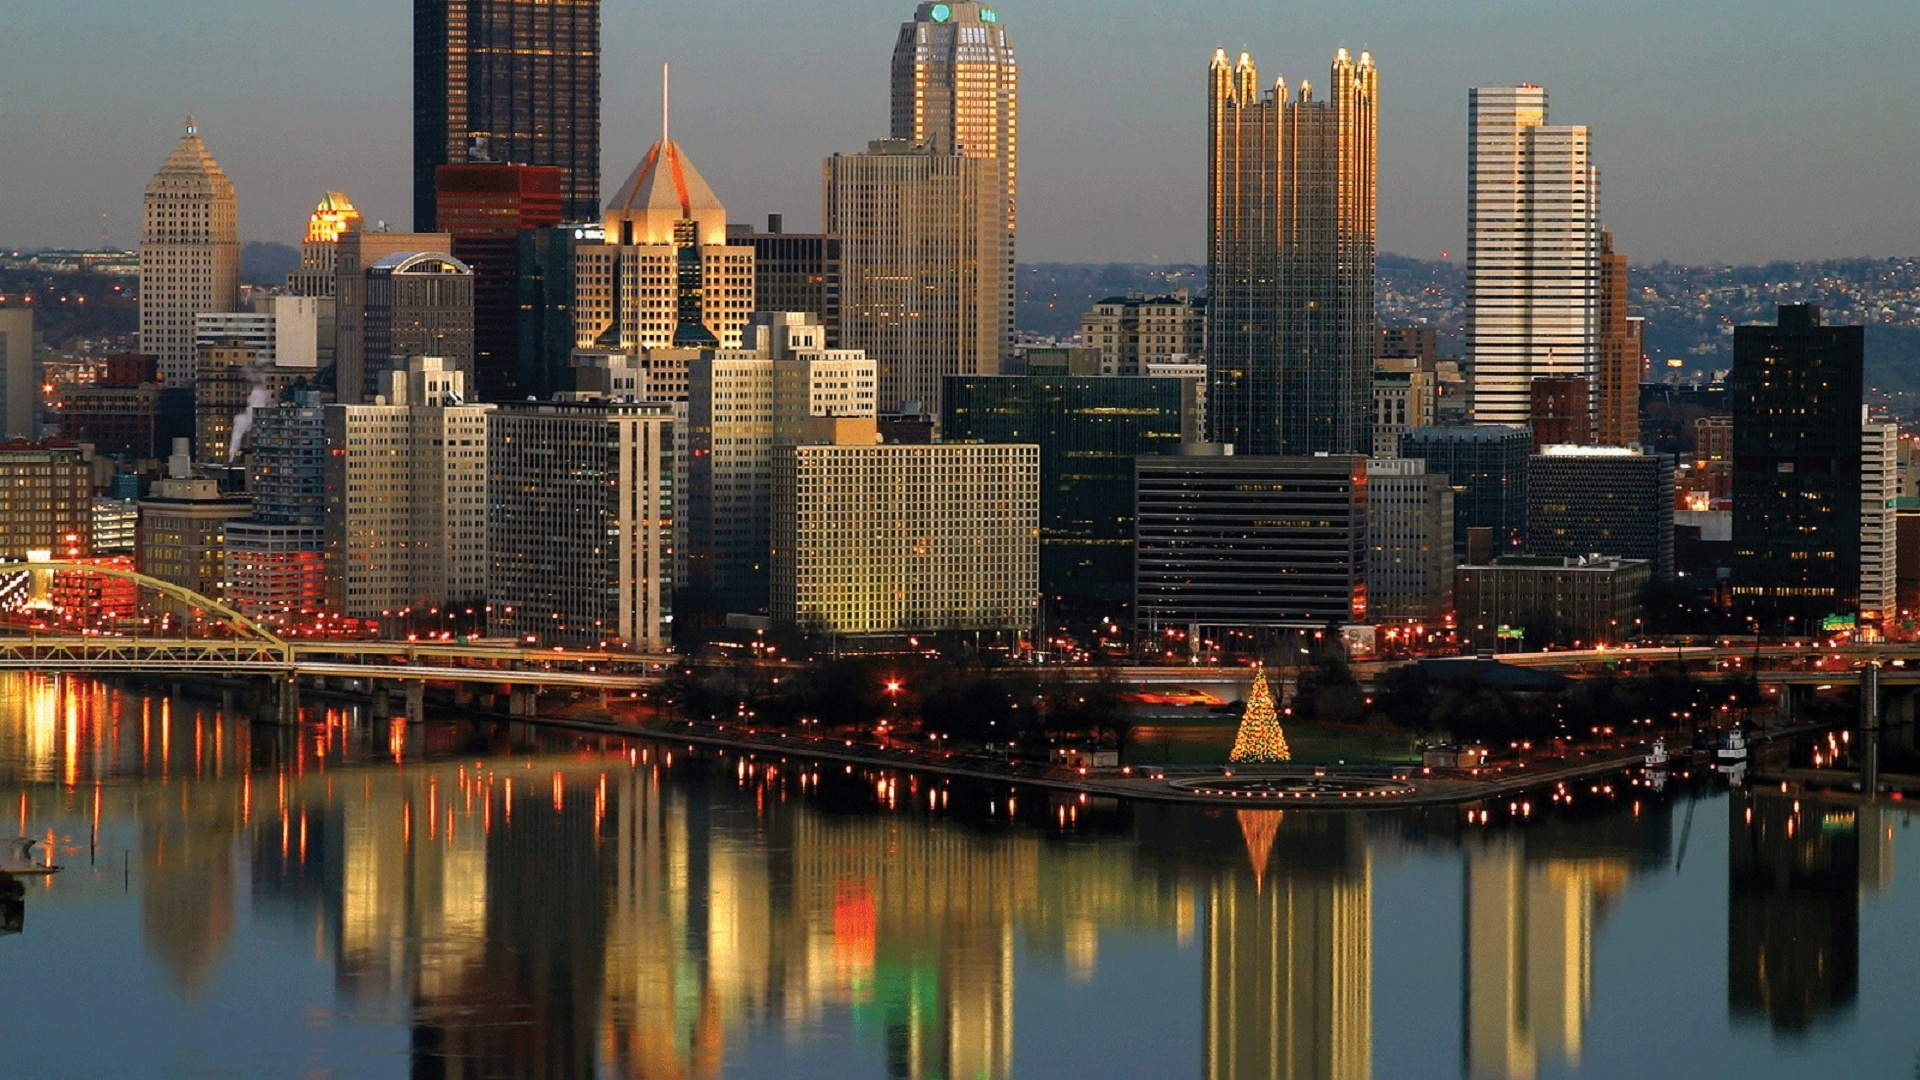 Pittsburgh Pennsylvania photos, Urban landscapes, City's character, Skyline views, 1920x1080 Full HD Desktop